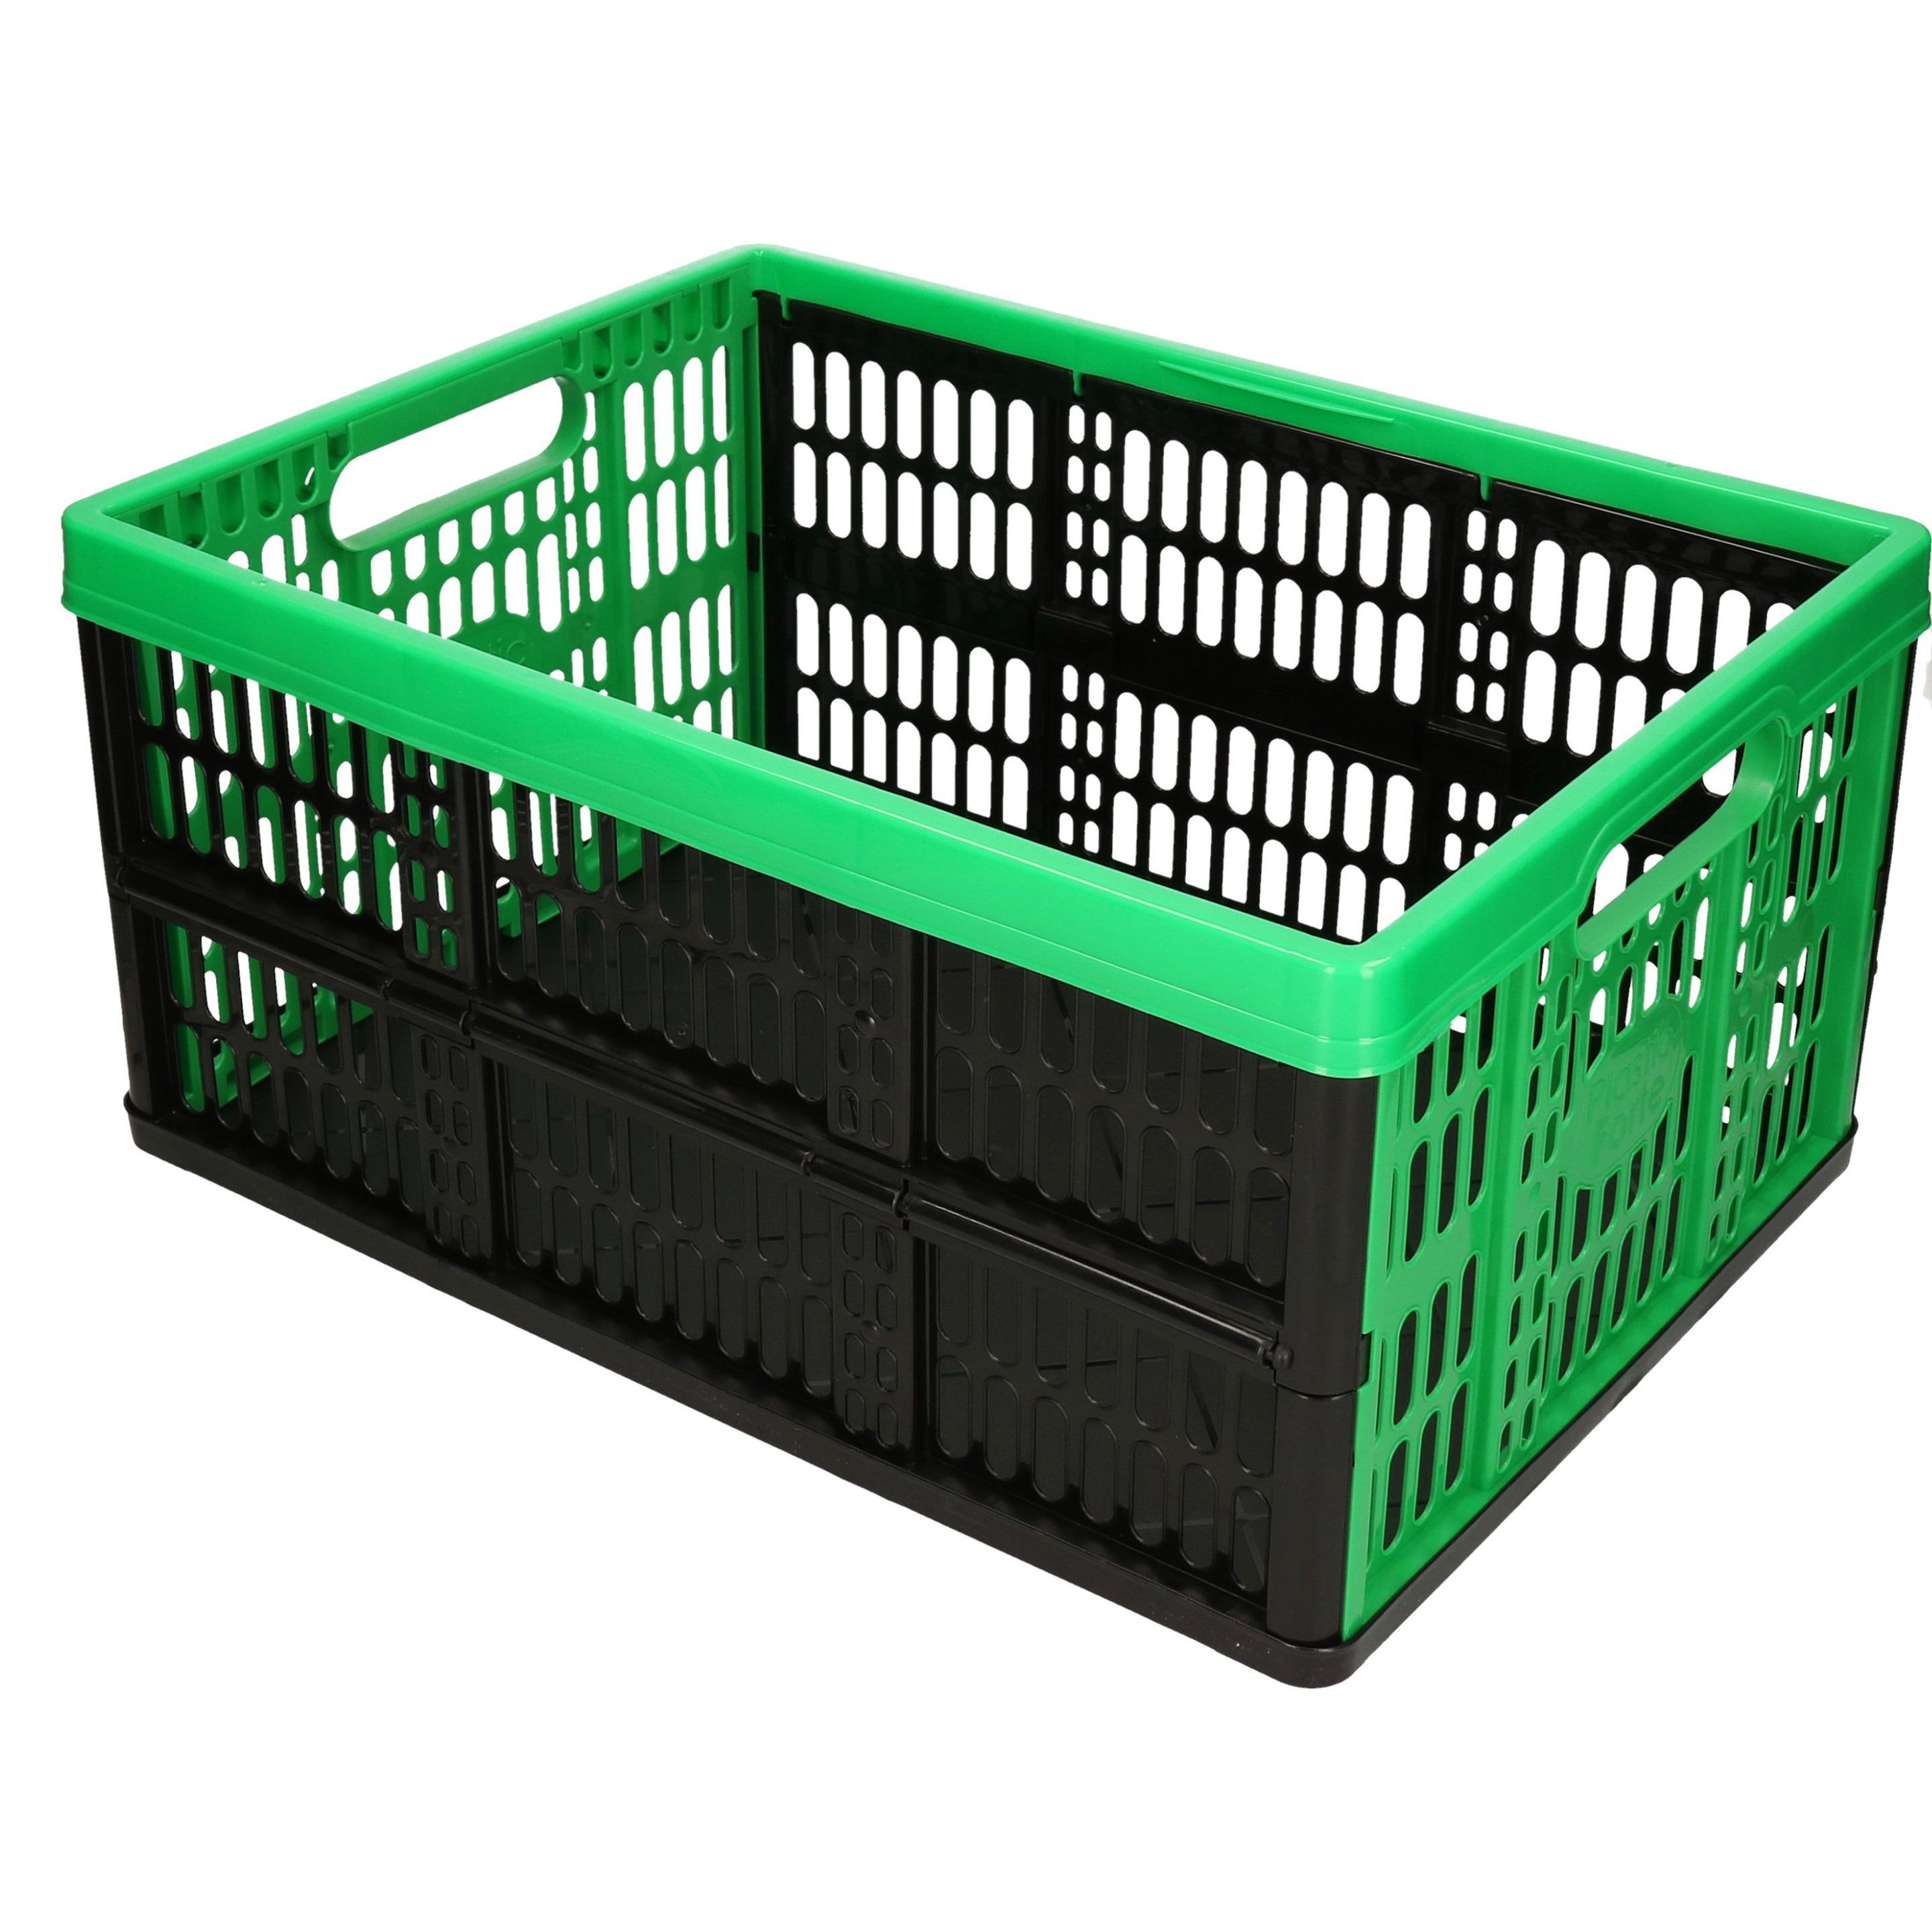 Opvouwbare kratten/inklapbare boodschappen kisten zwart/groen 48 x 35 x 24 cm - klapkratten - 32 liter inhoud